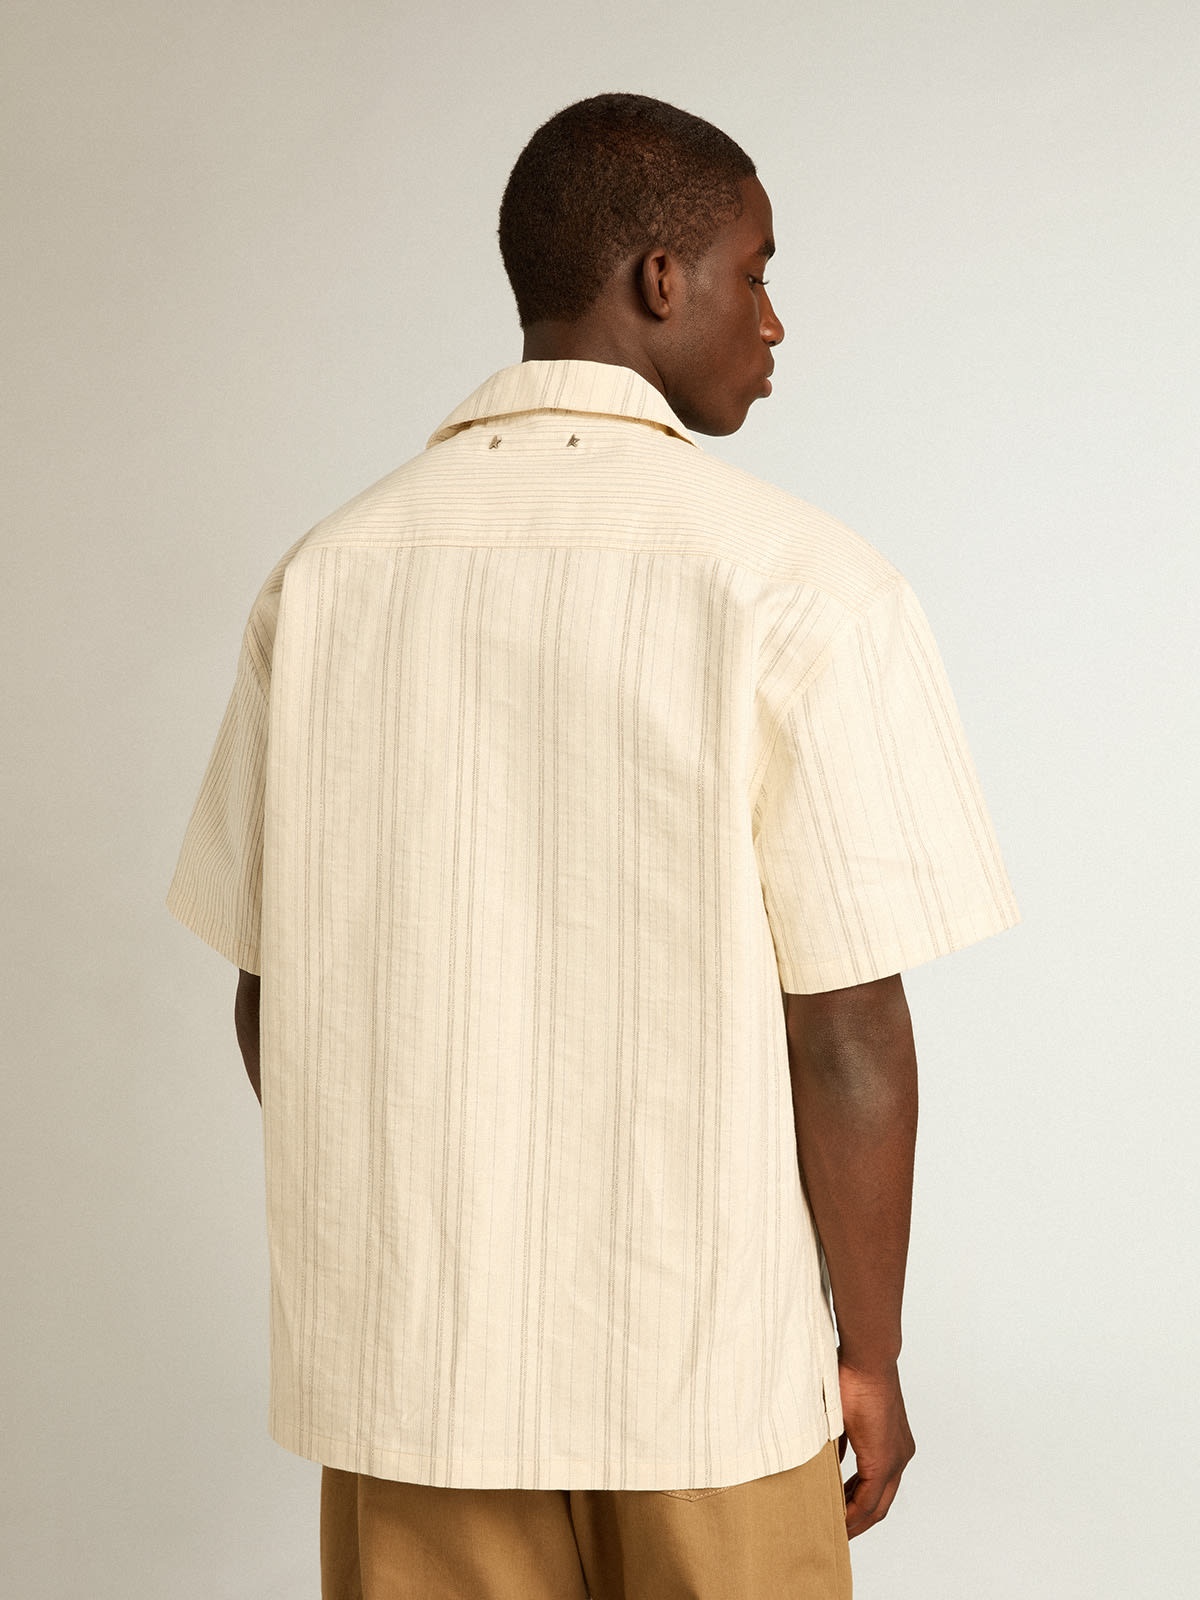 Men's short-sleeved shirt in ecru-colored cotton - 4